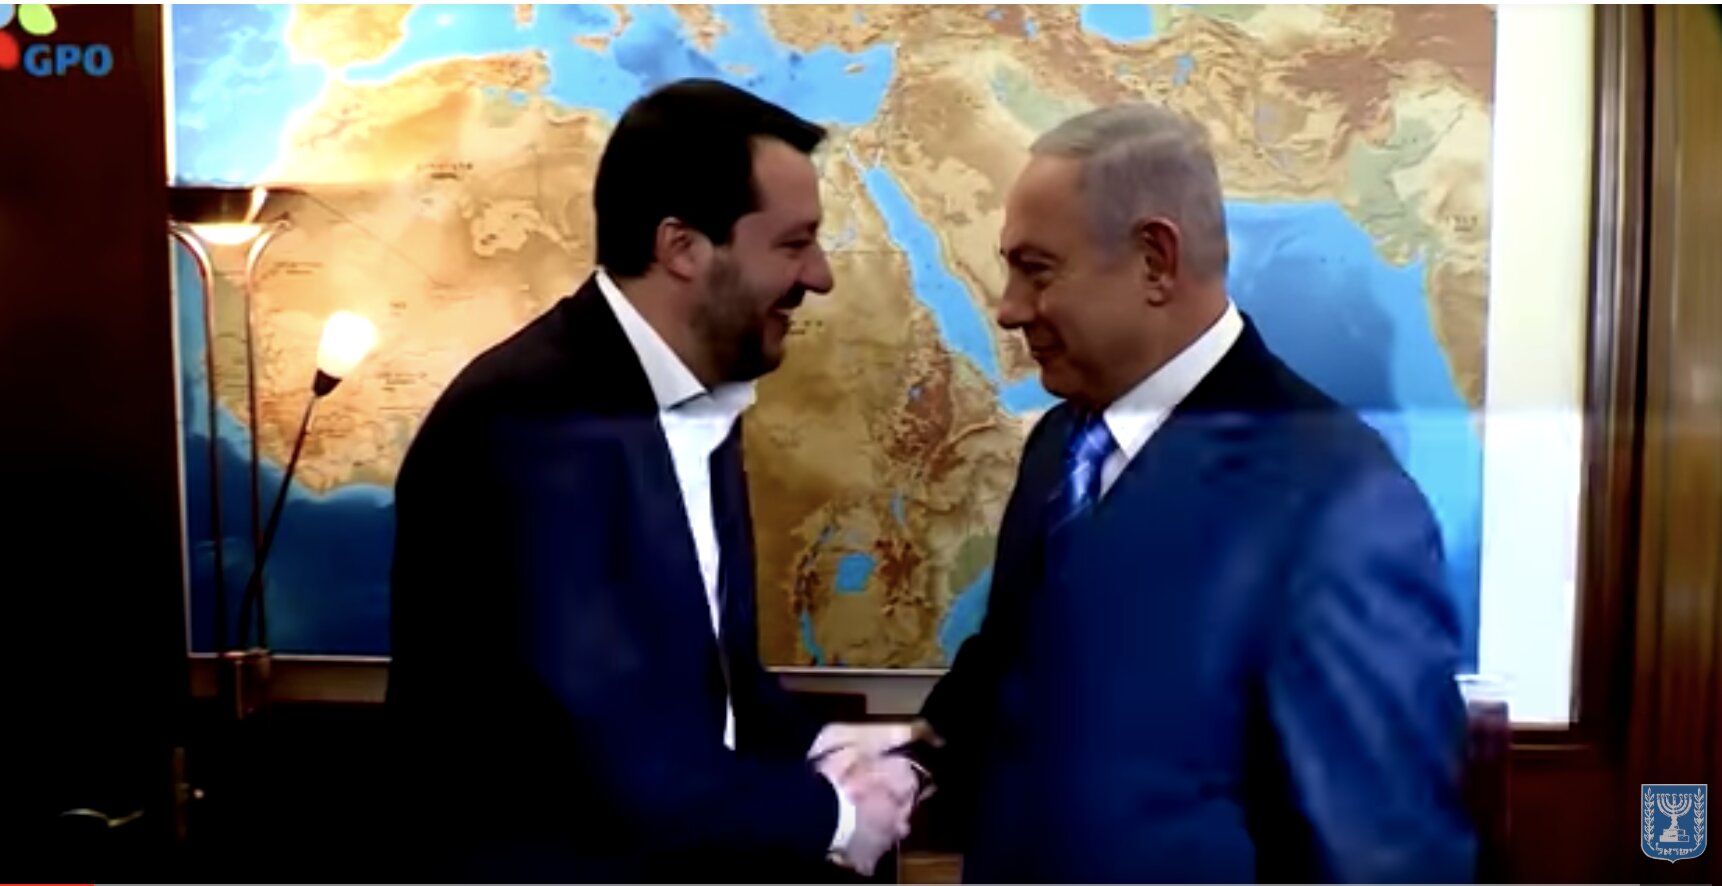 Freemason Mateo Salvini kisses up to Netanyahu in Israel. Calls Palestinians “terrorists”. SHAME ON YOU!